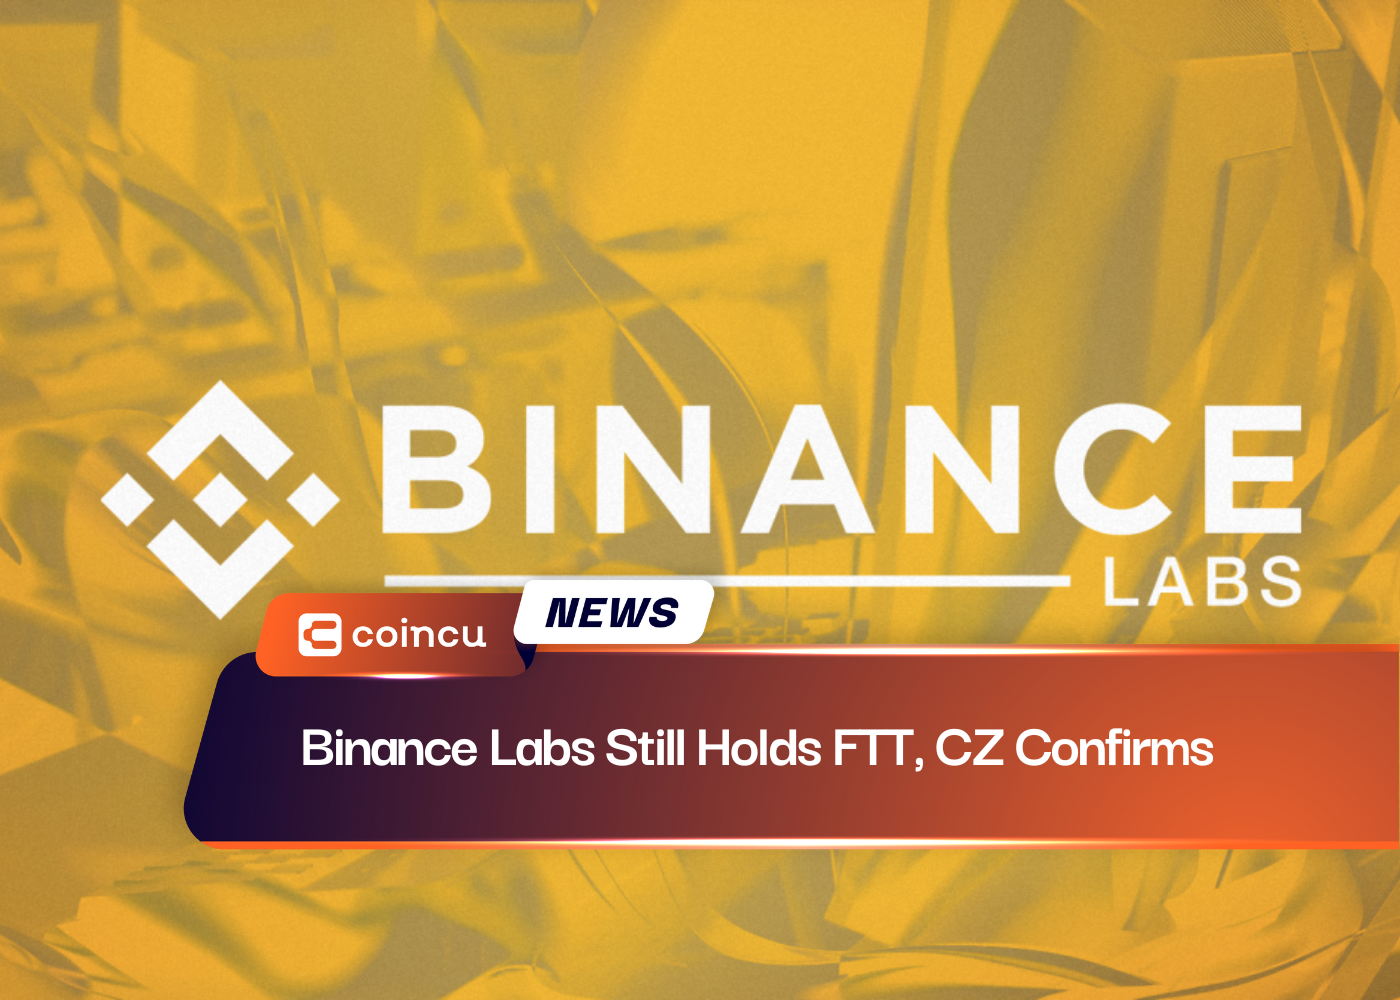 Binance Labs Still Holds FTT, CZ Confirms